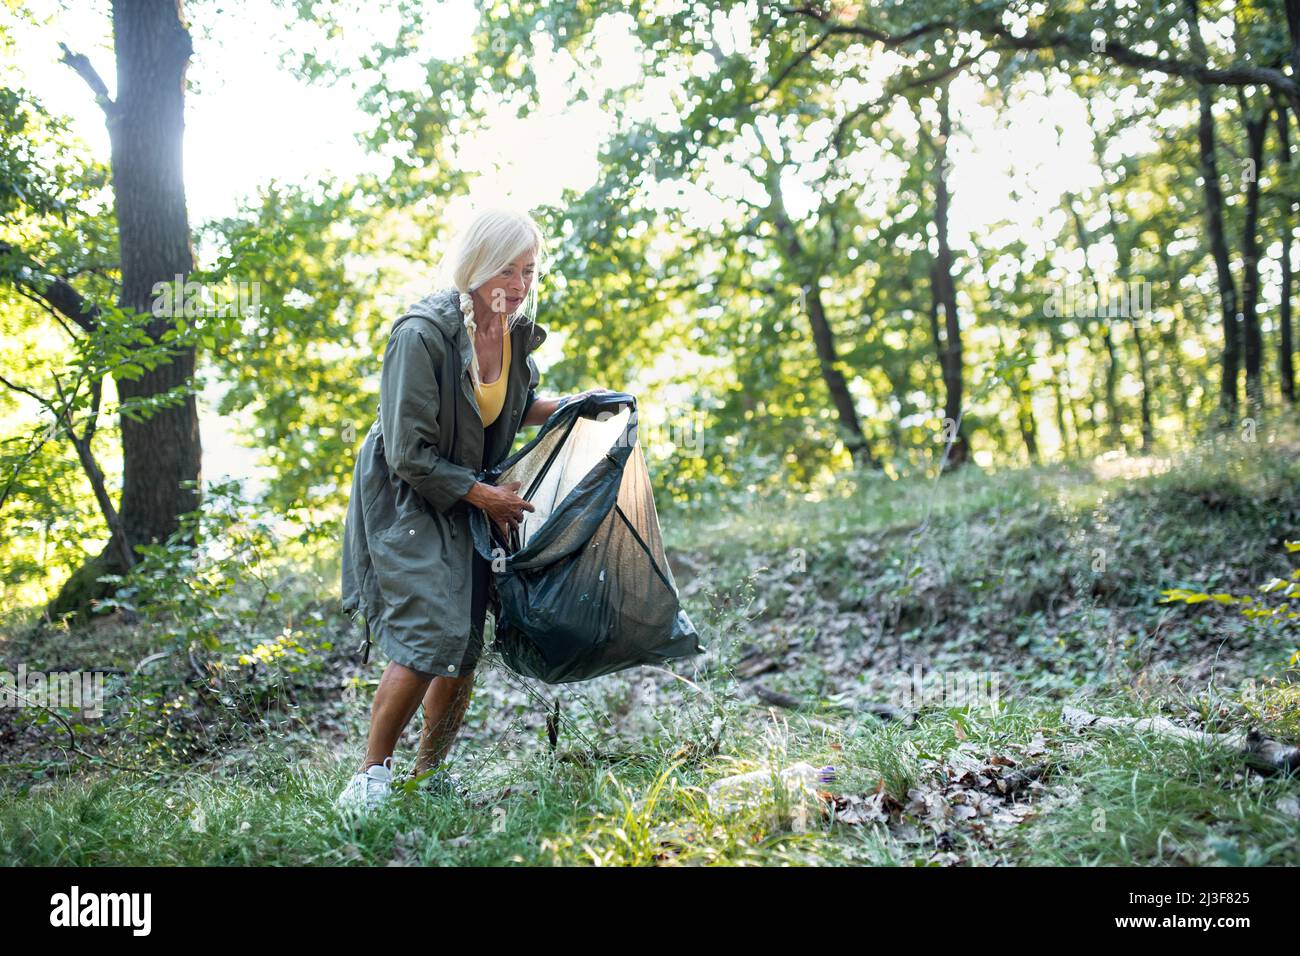 Ältere Ökologin mit Müllbeutel, die im Wald Abfälle aufsammeln. Stockfoto